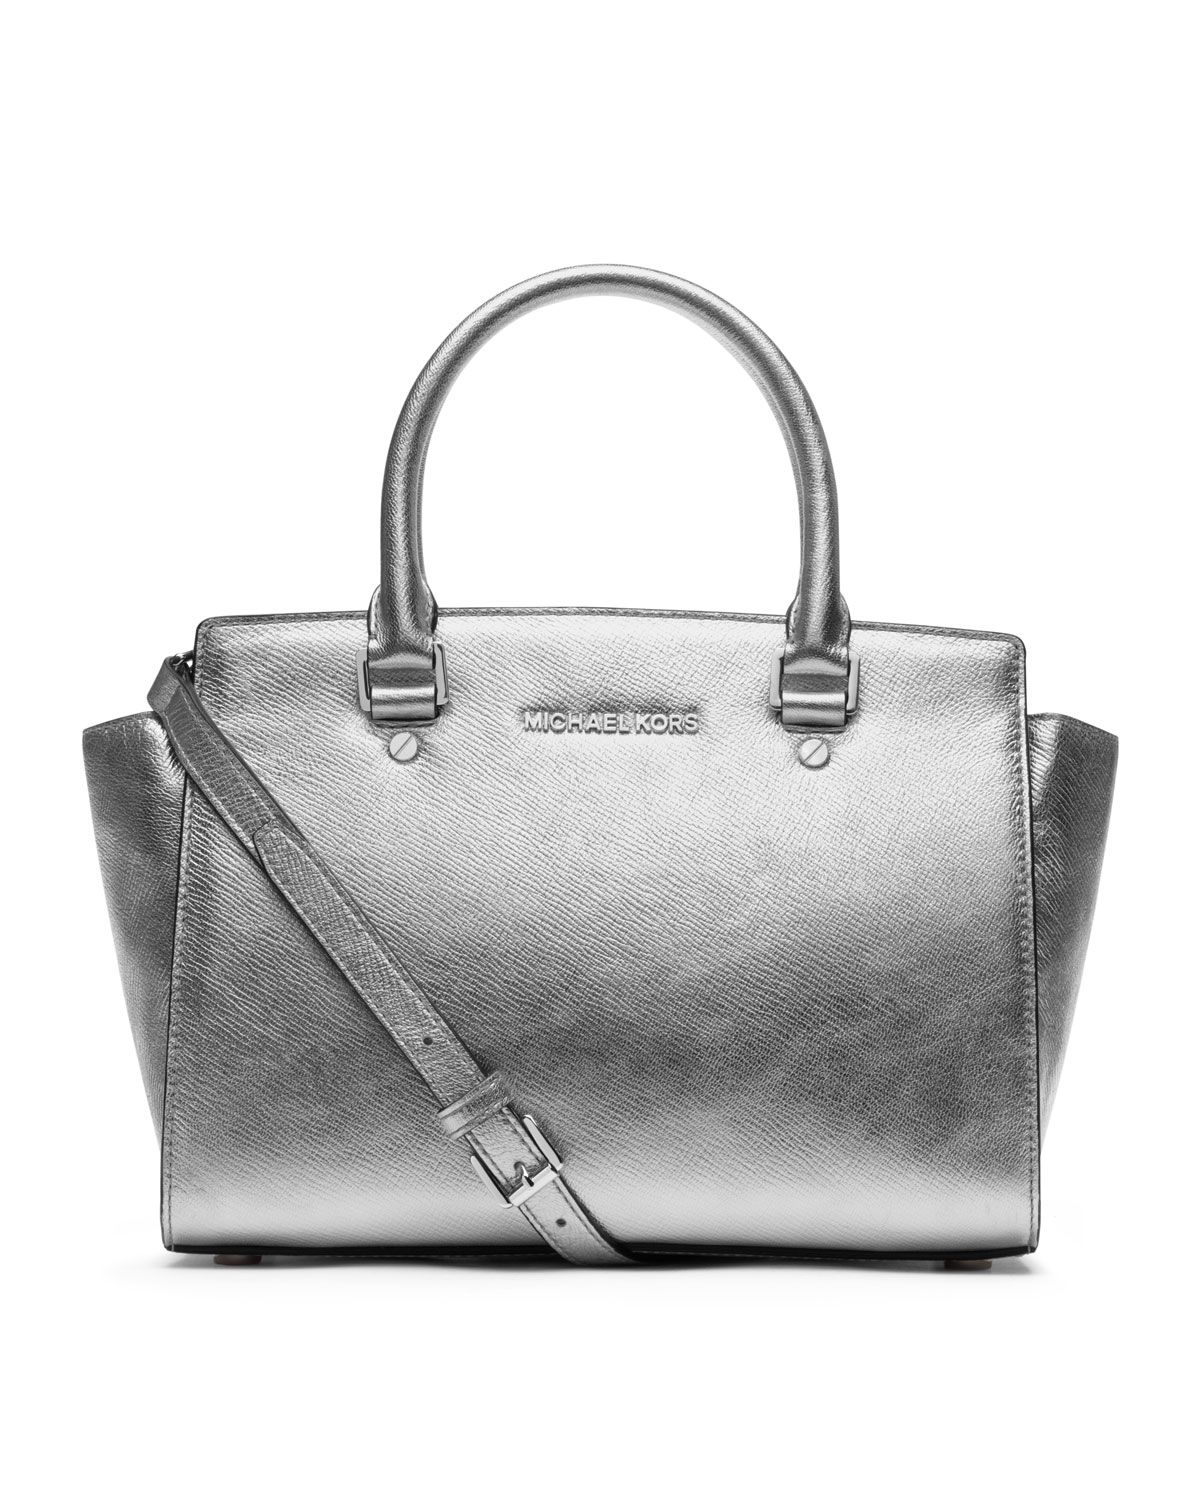 MK metallic handbags